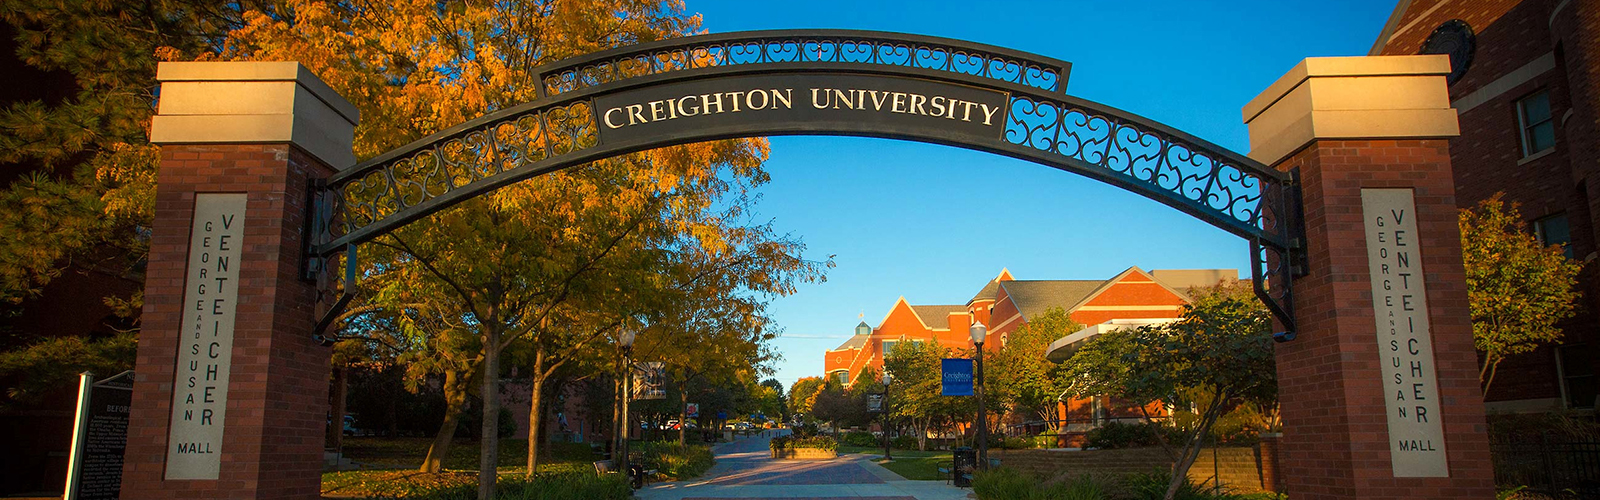 Creighton University plans 75 M medical school facility